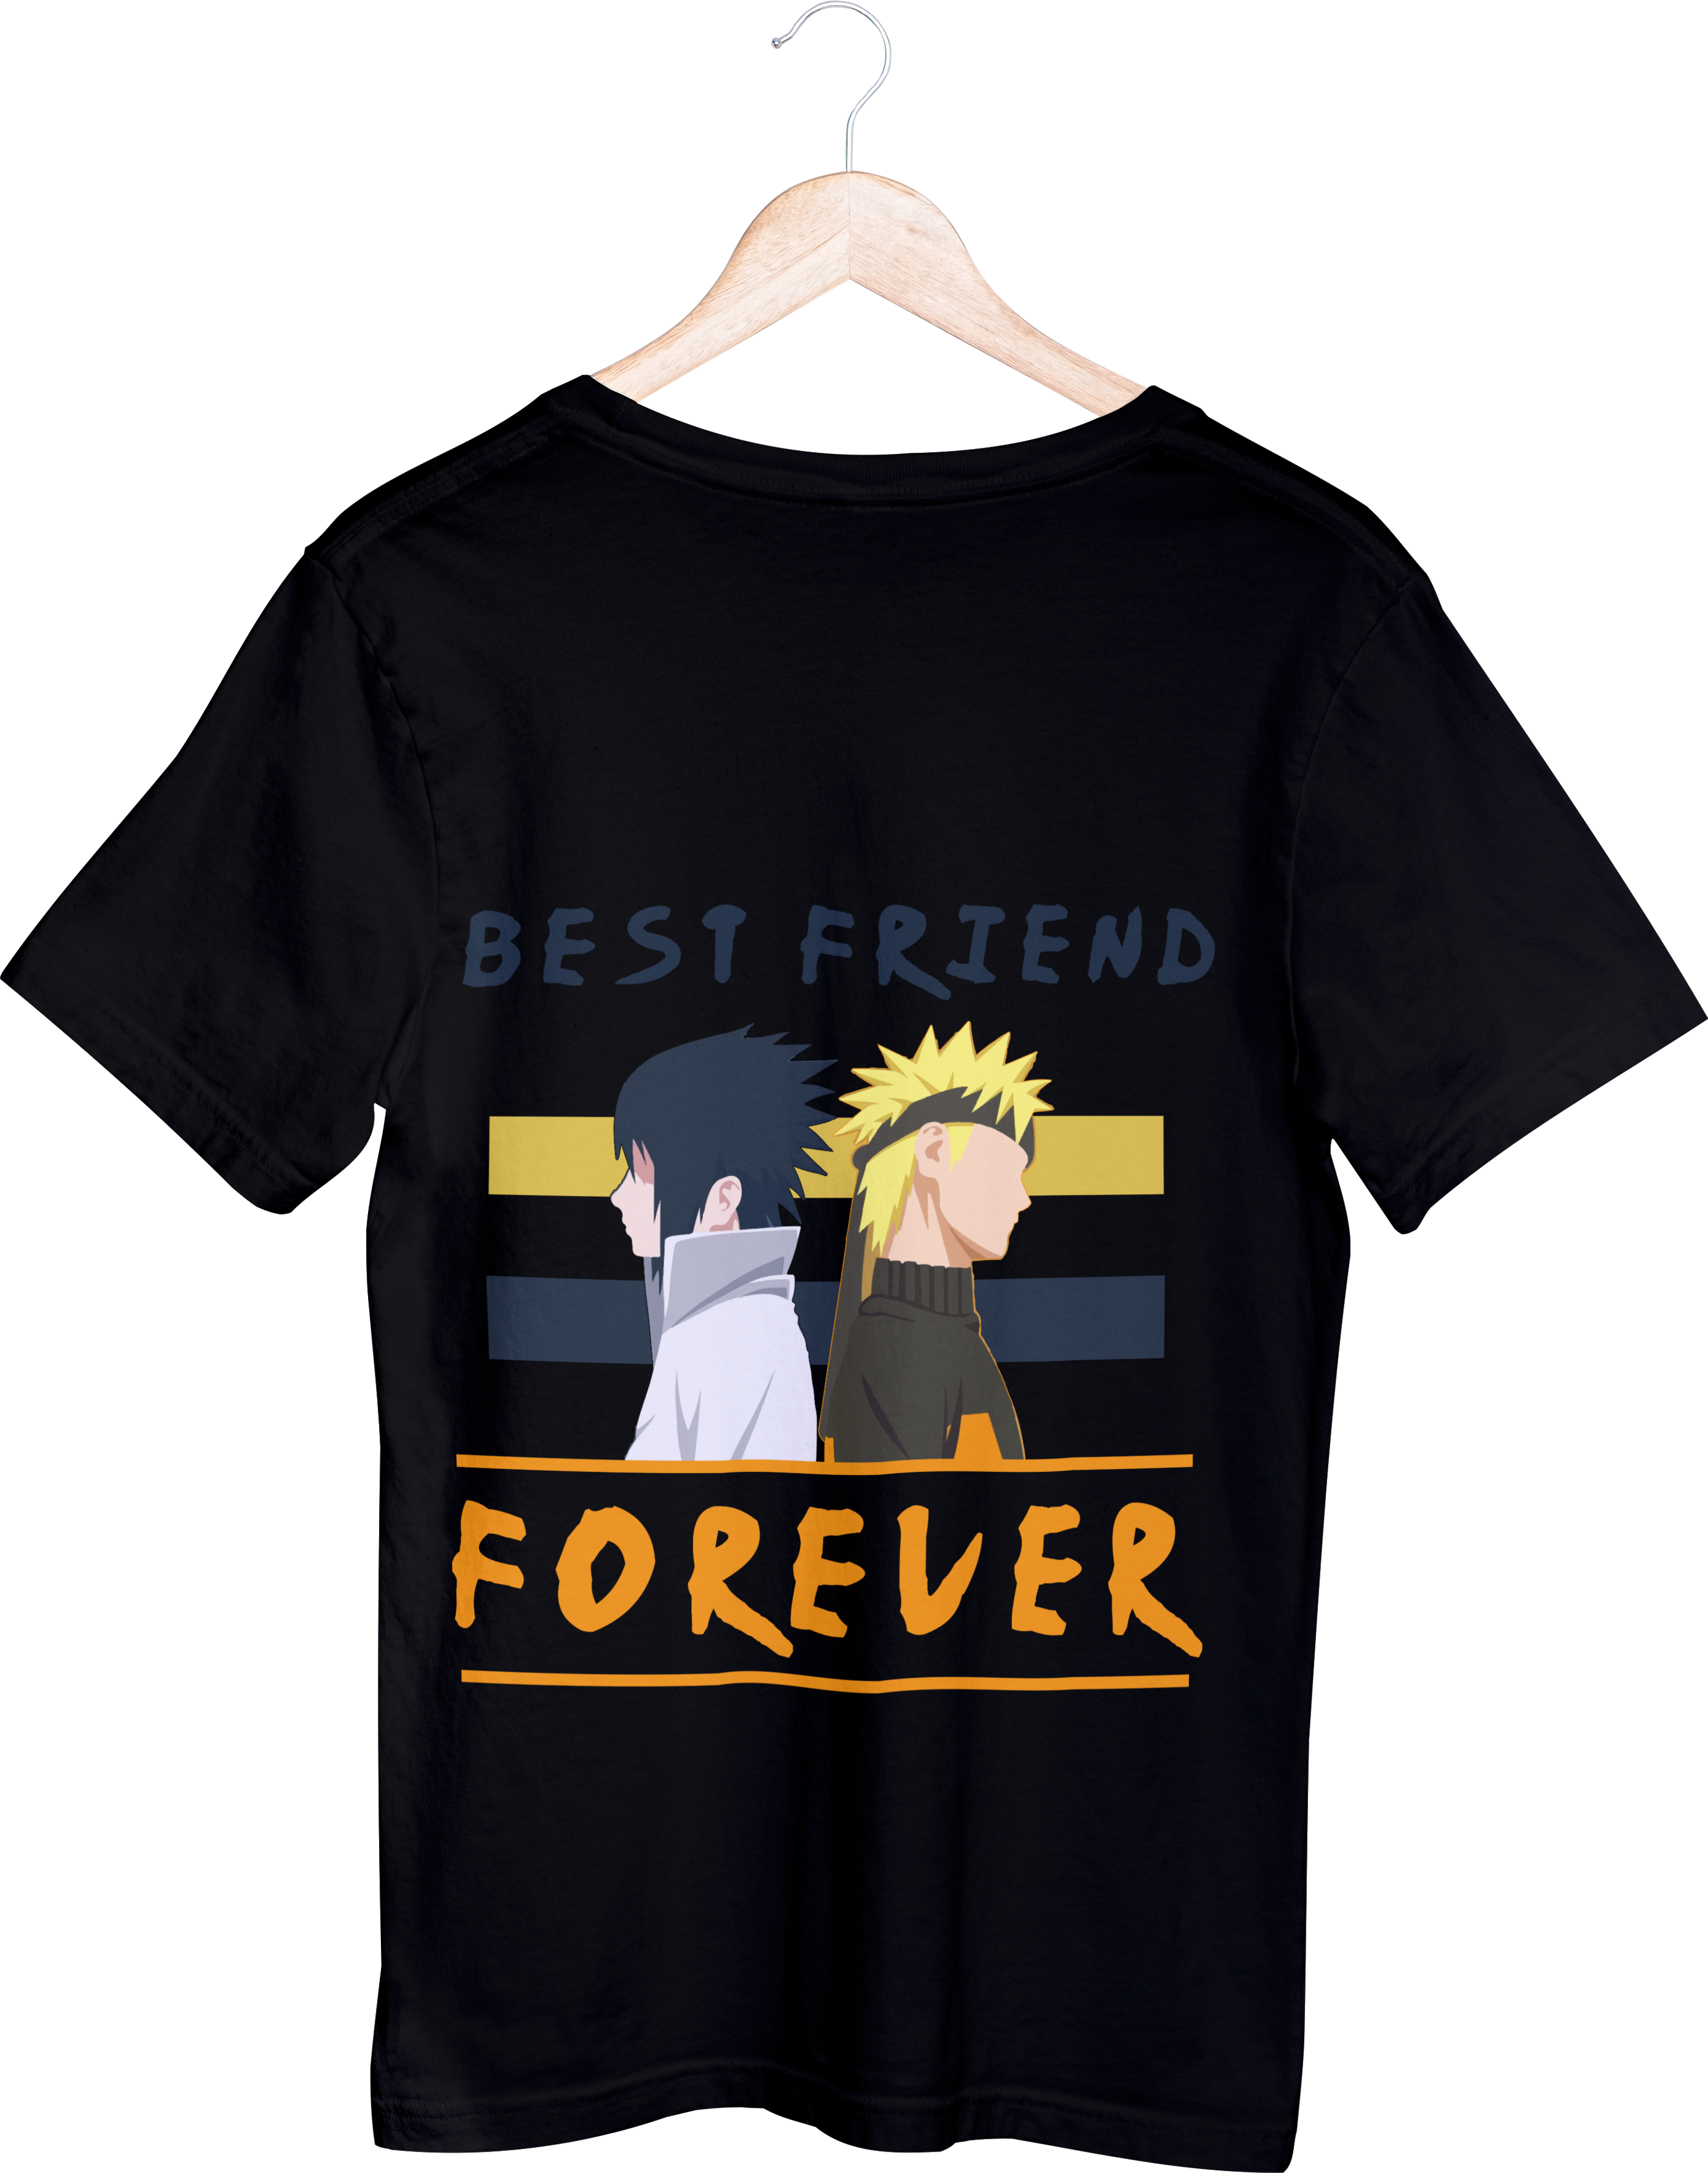 Naruto Tops - חולצה חברים הכי טובים לנצח - נארוטו